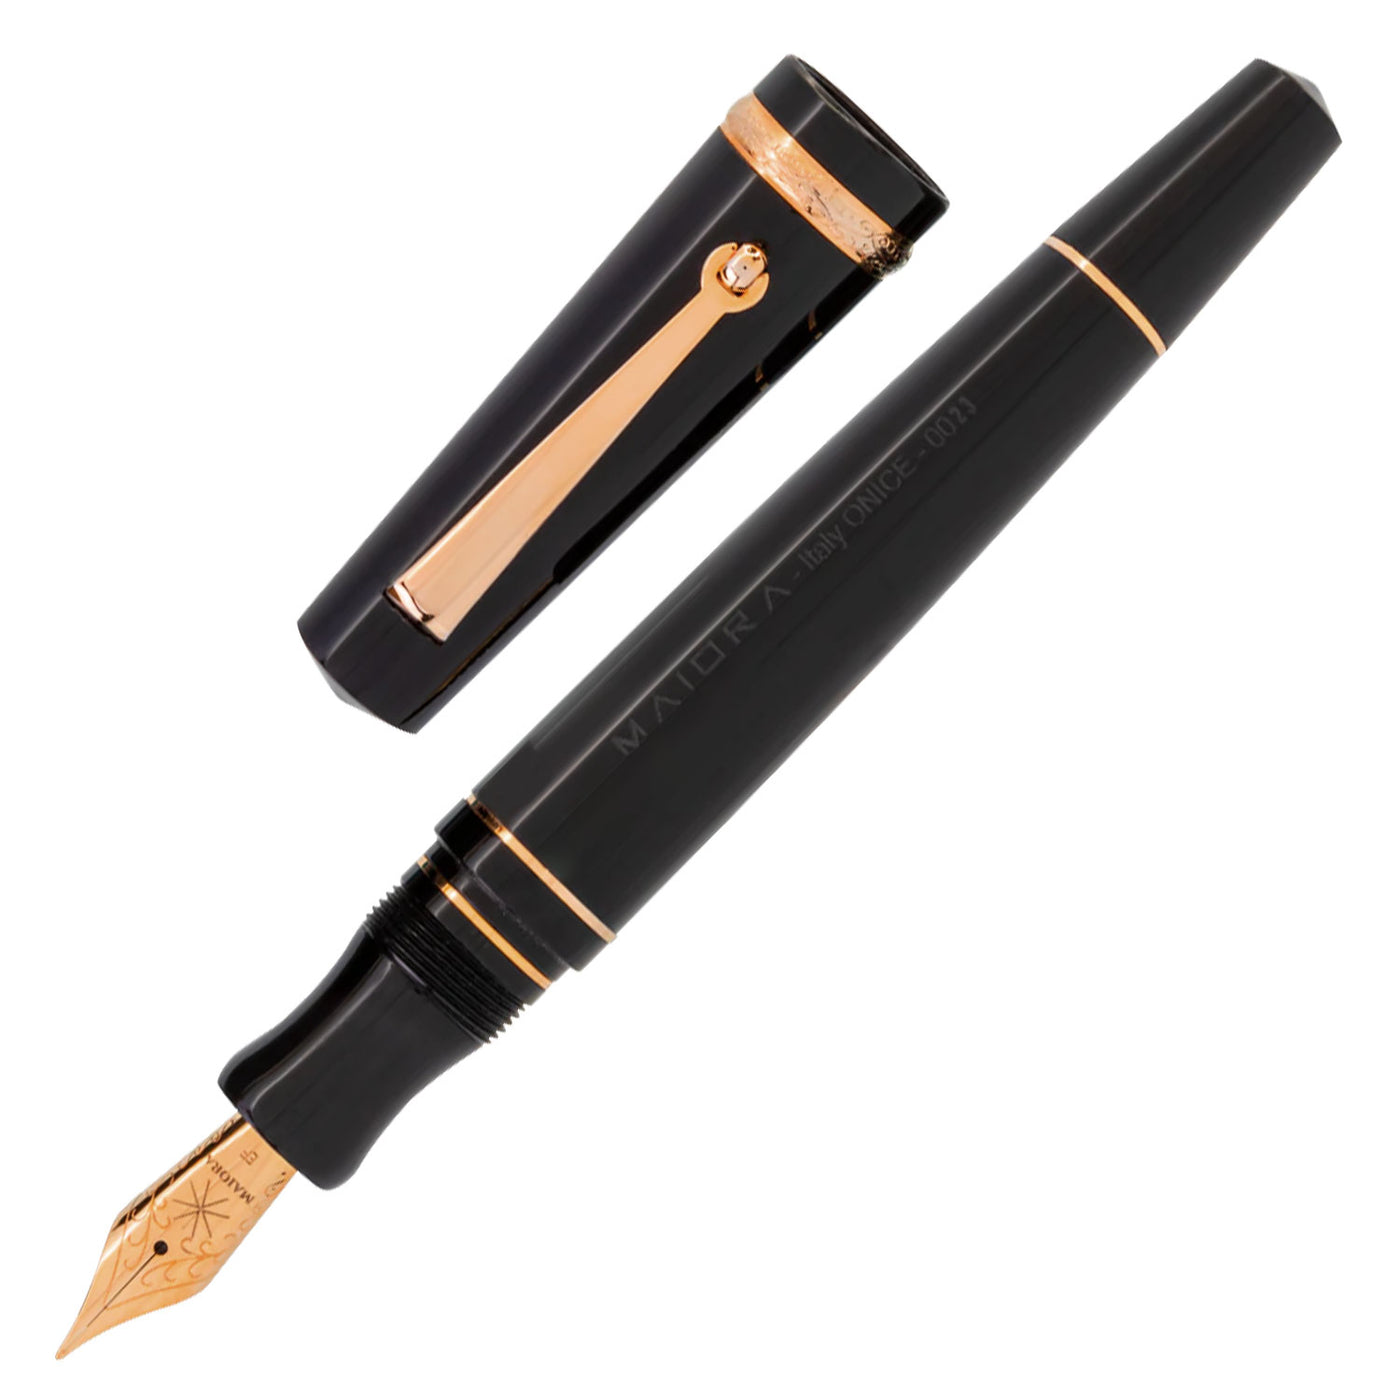 Maiora Aventus Fountain Pen - Onice Black RGT 1